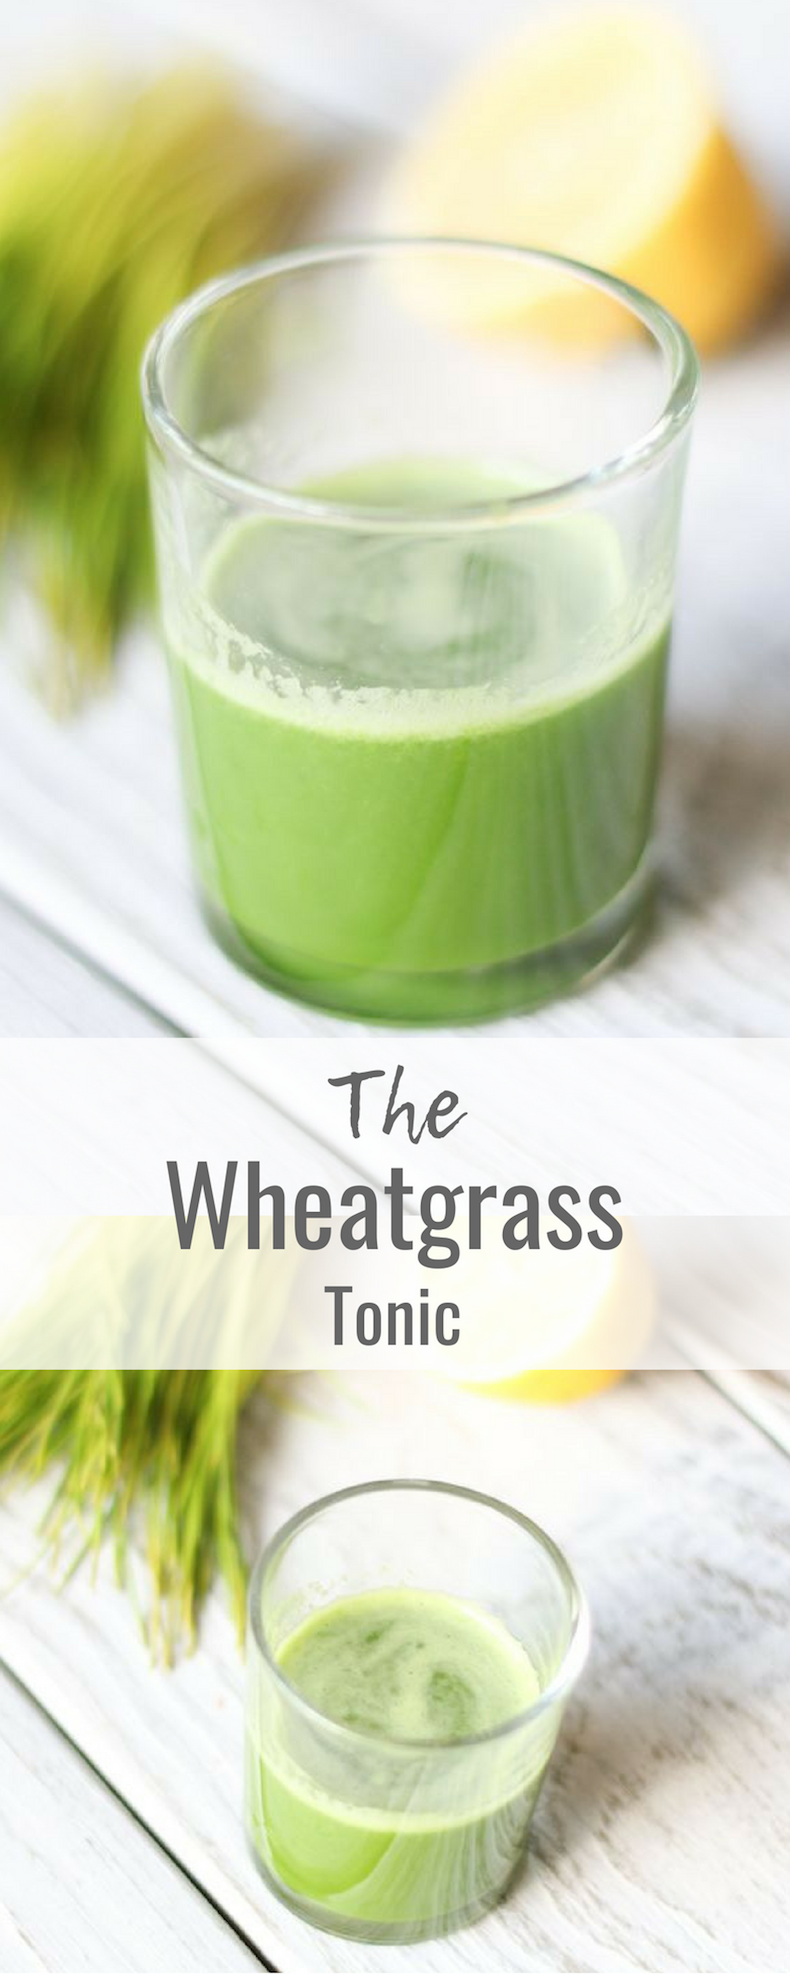 The Wheatgrass Tonic